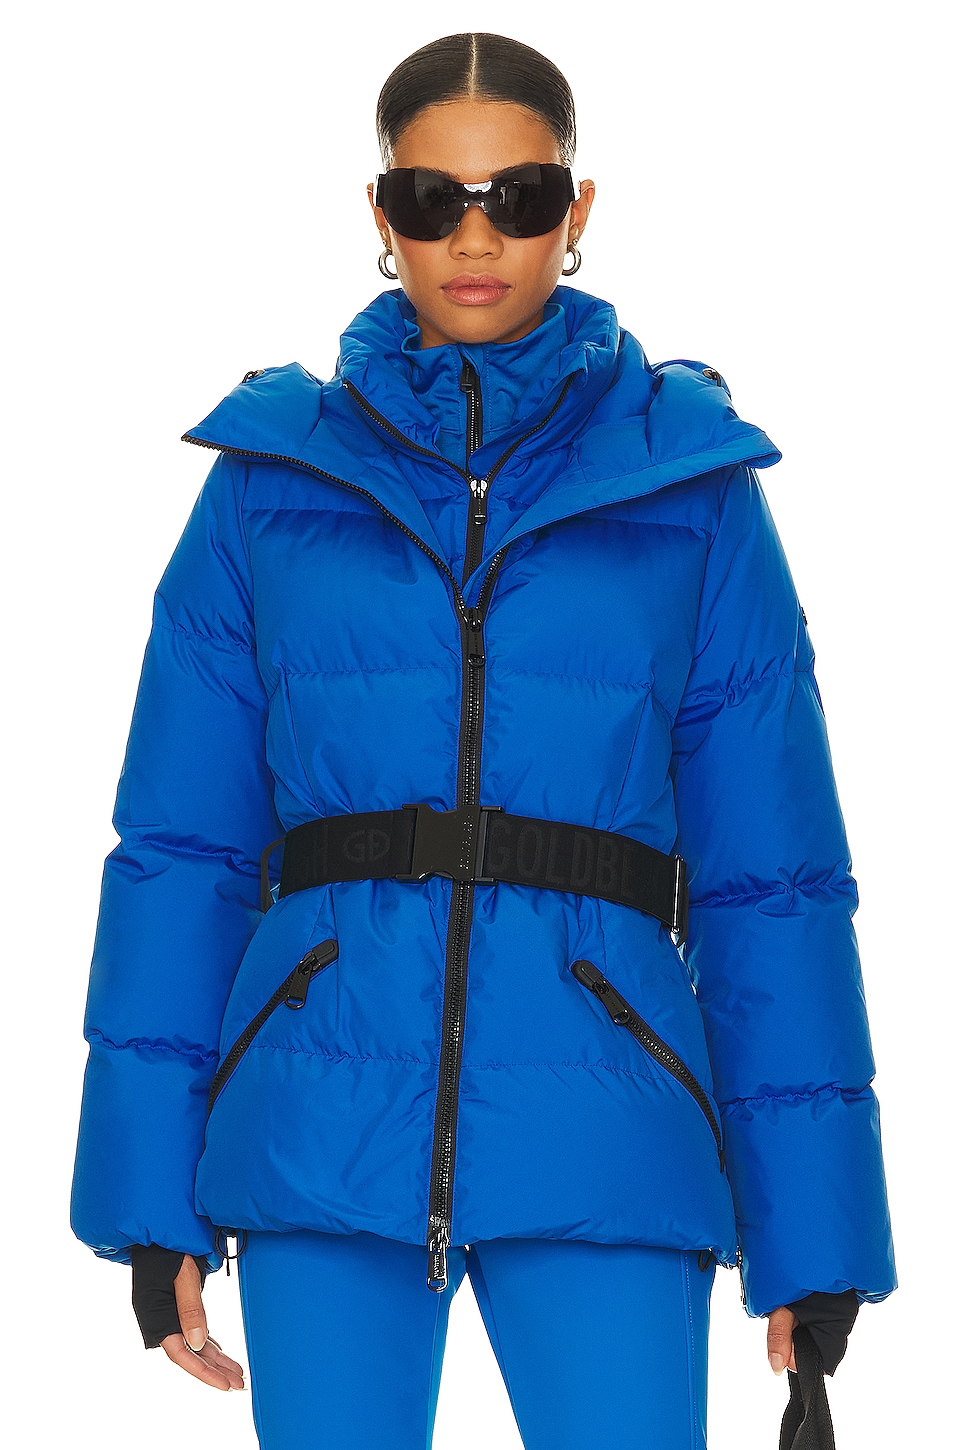 Goldbergh Snowmass Ski Jacket in Electric Blue